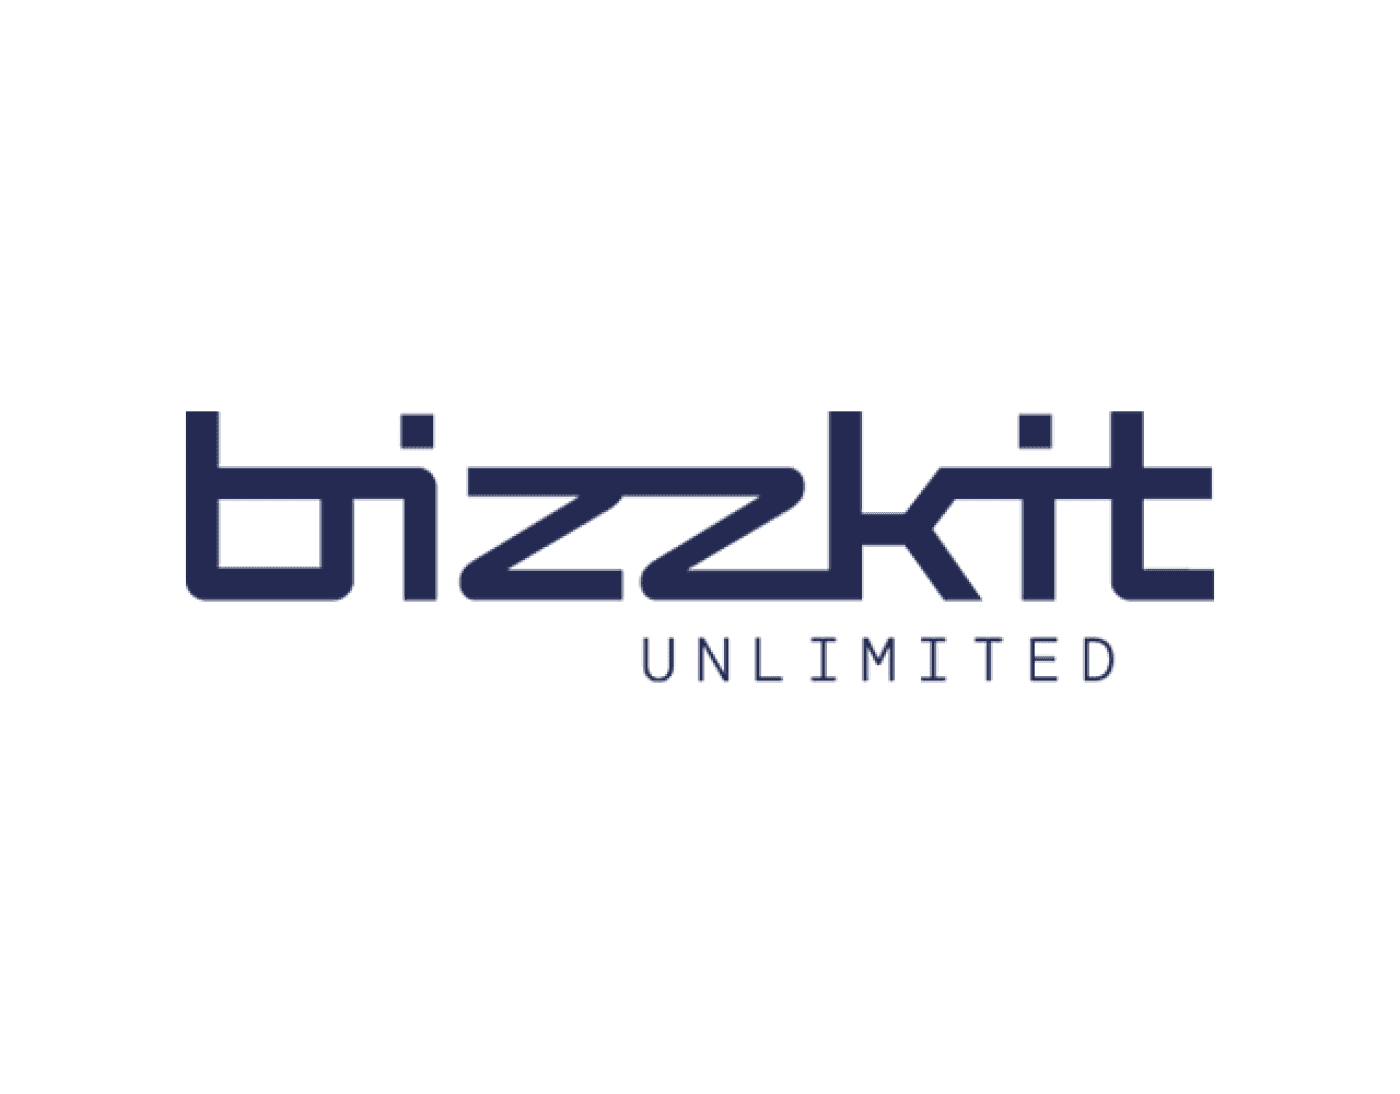 bizzkit_unlimited-640x500-01.png